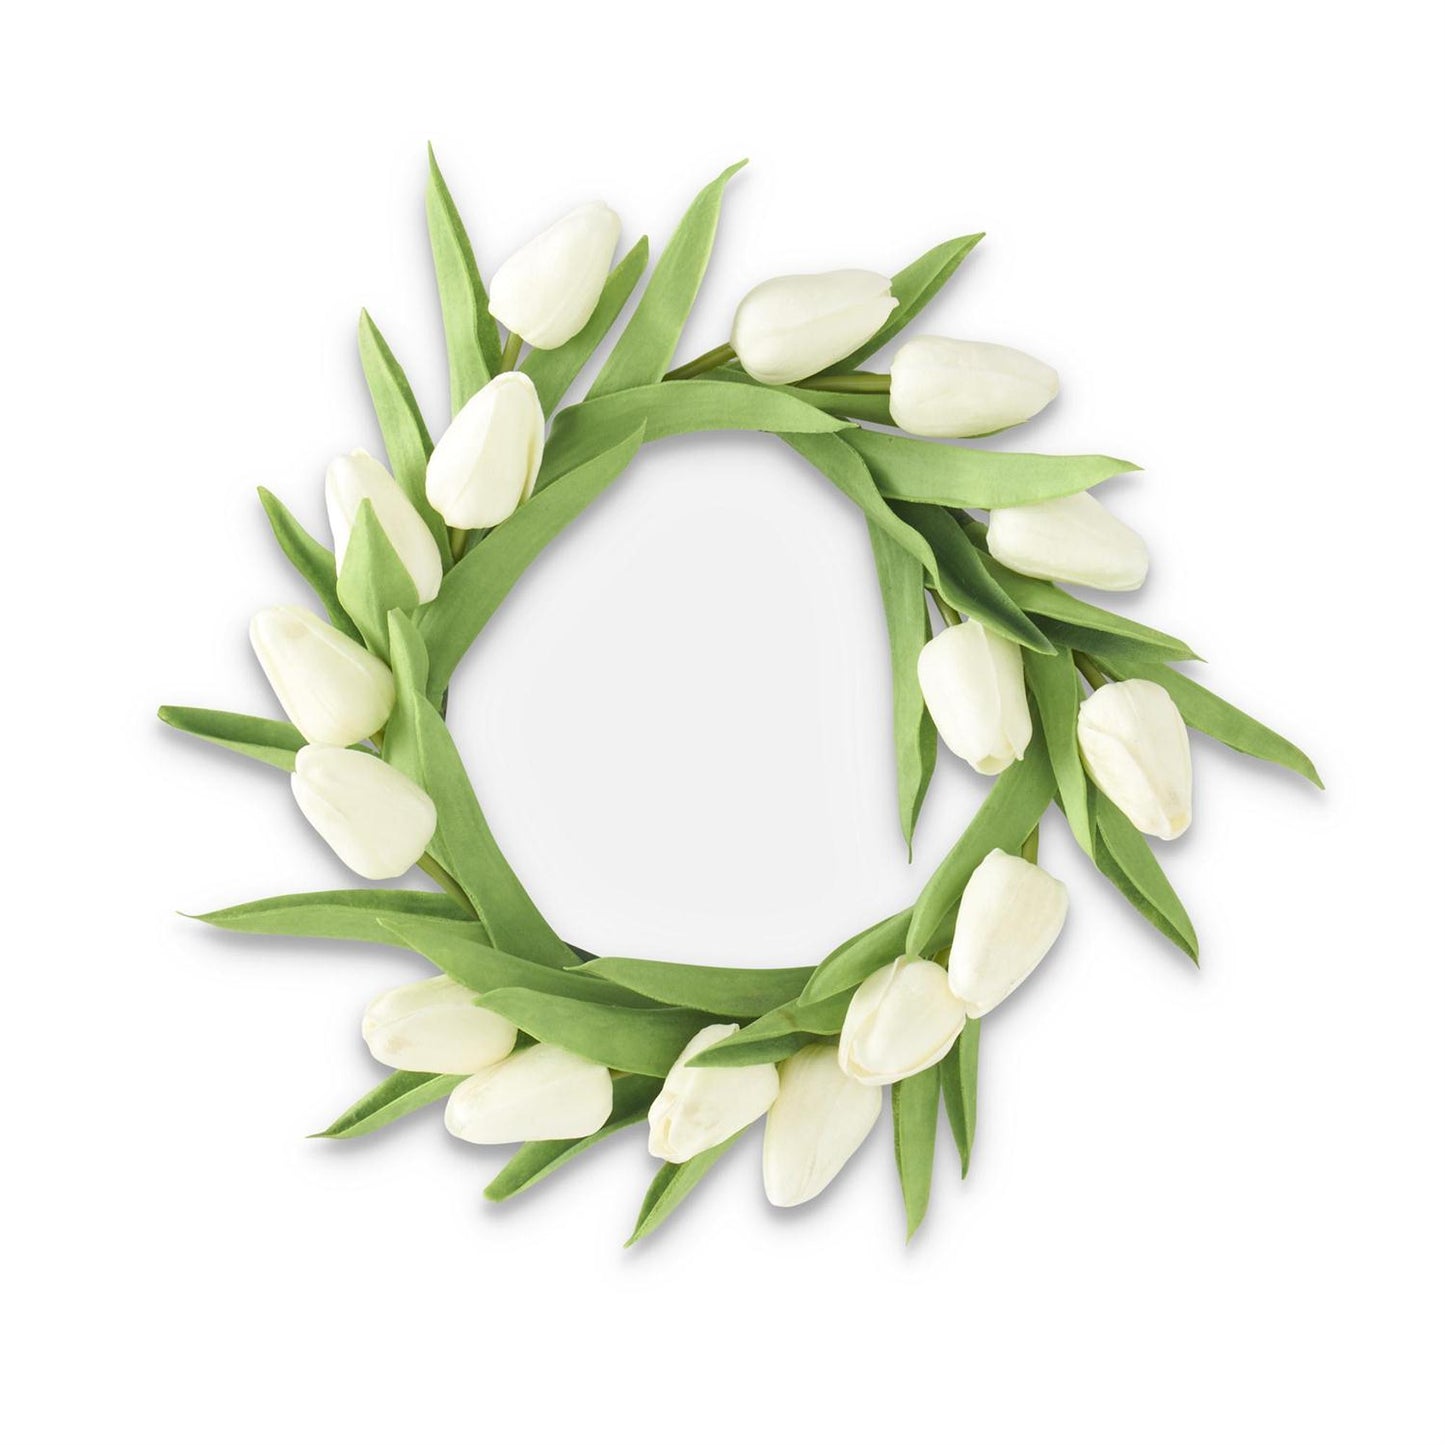 Tulip Accent Wreath - White